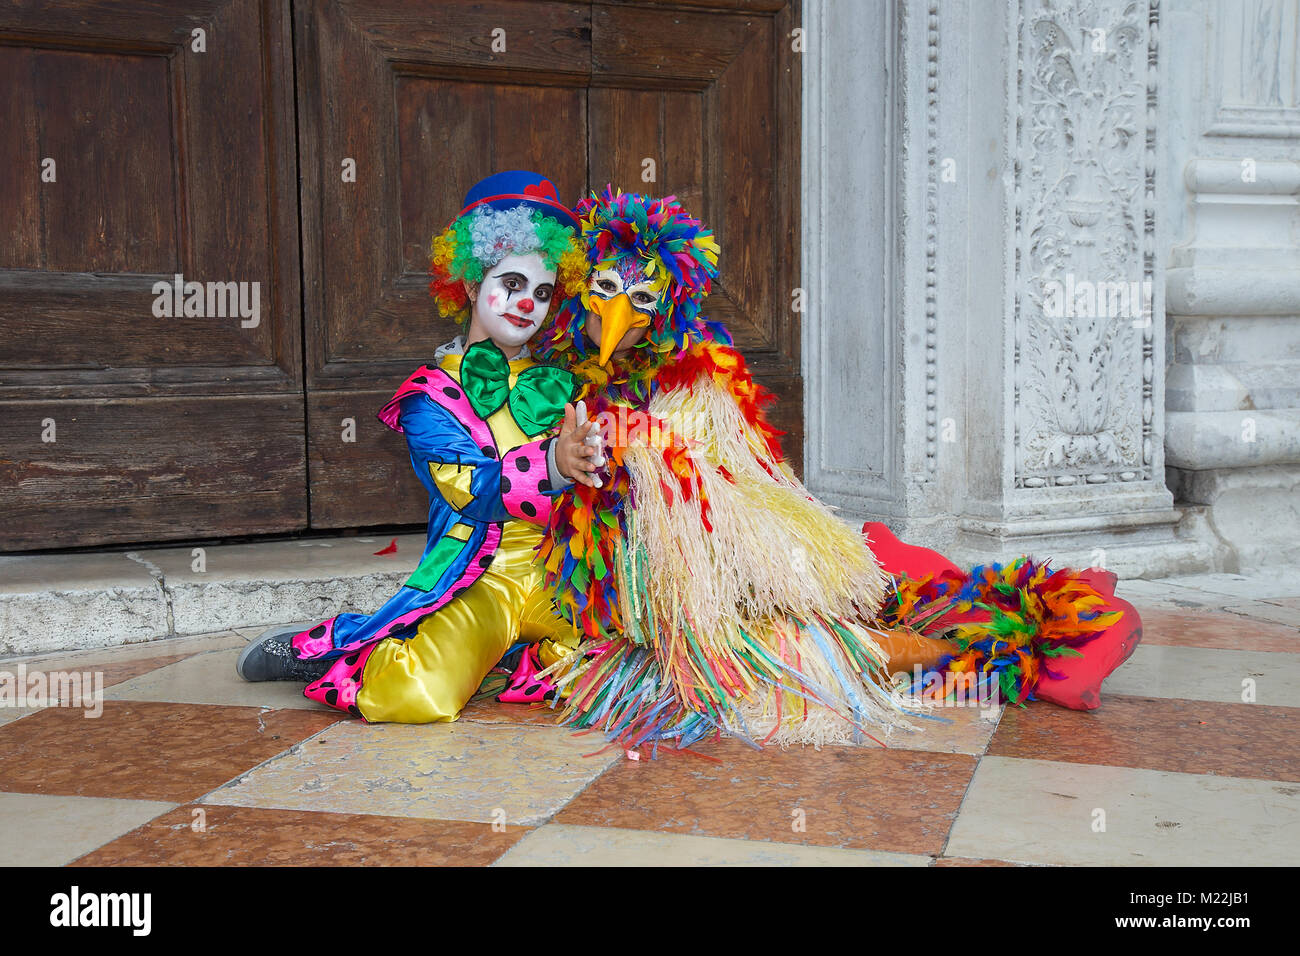 Clown Maske Venedig Karneval - Jester Maske in bunten Kostüm auf dem Markusplatz in Venedig Stockfoto